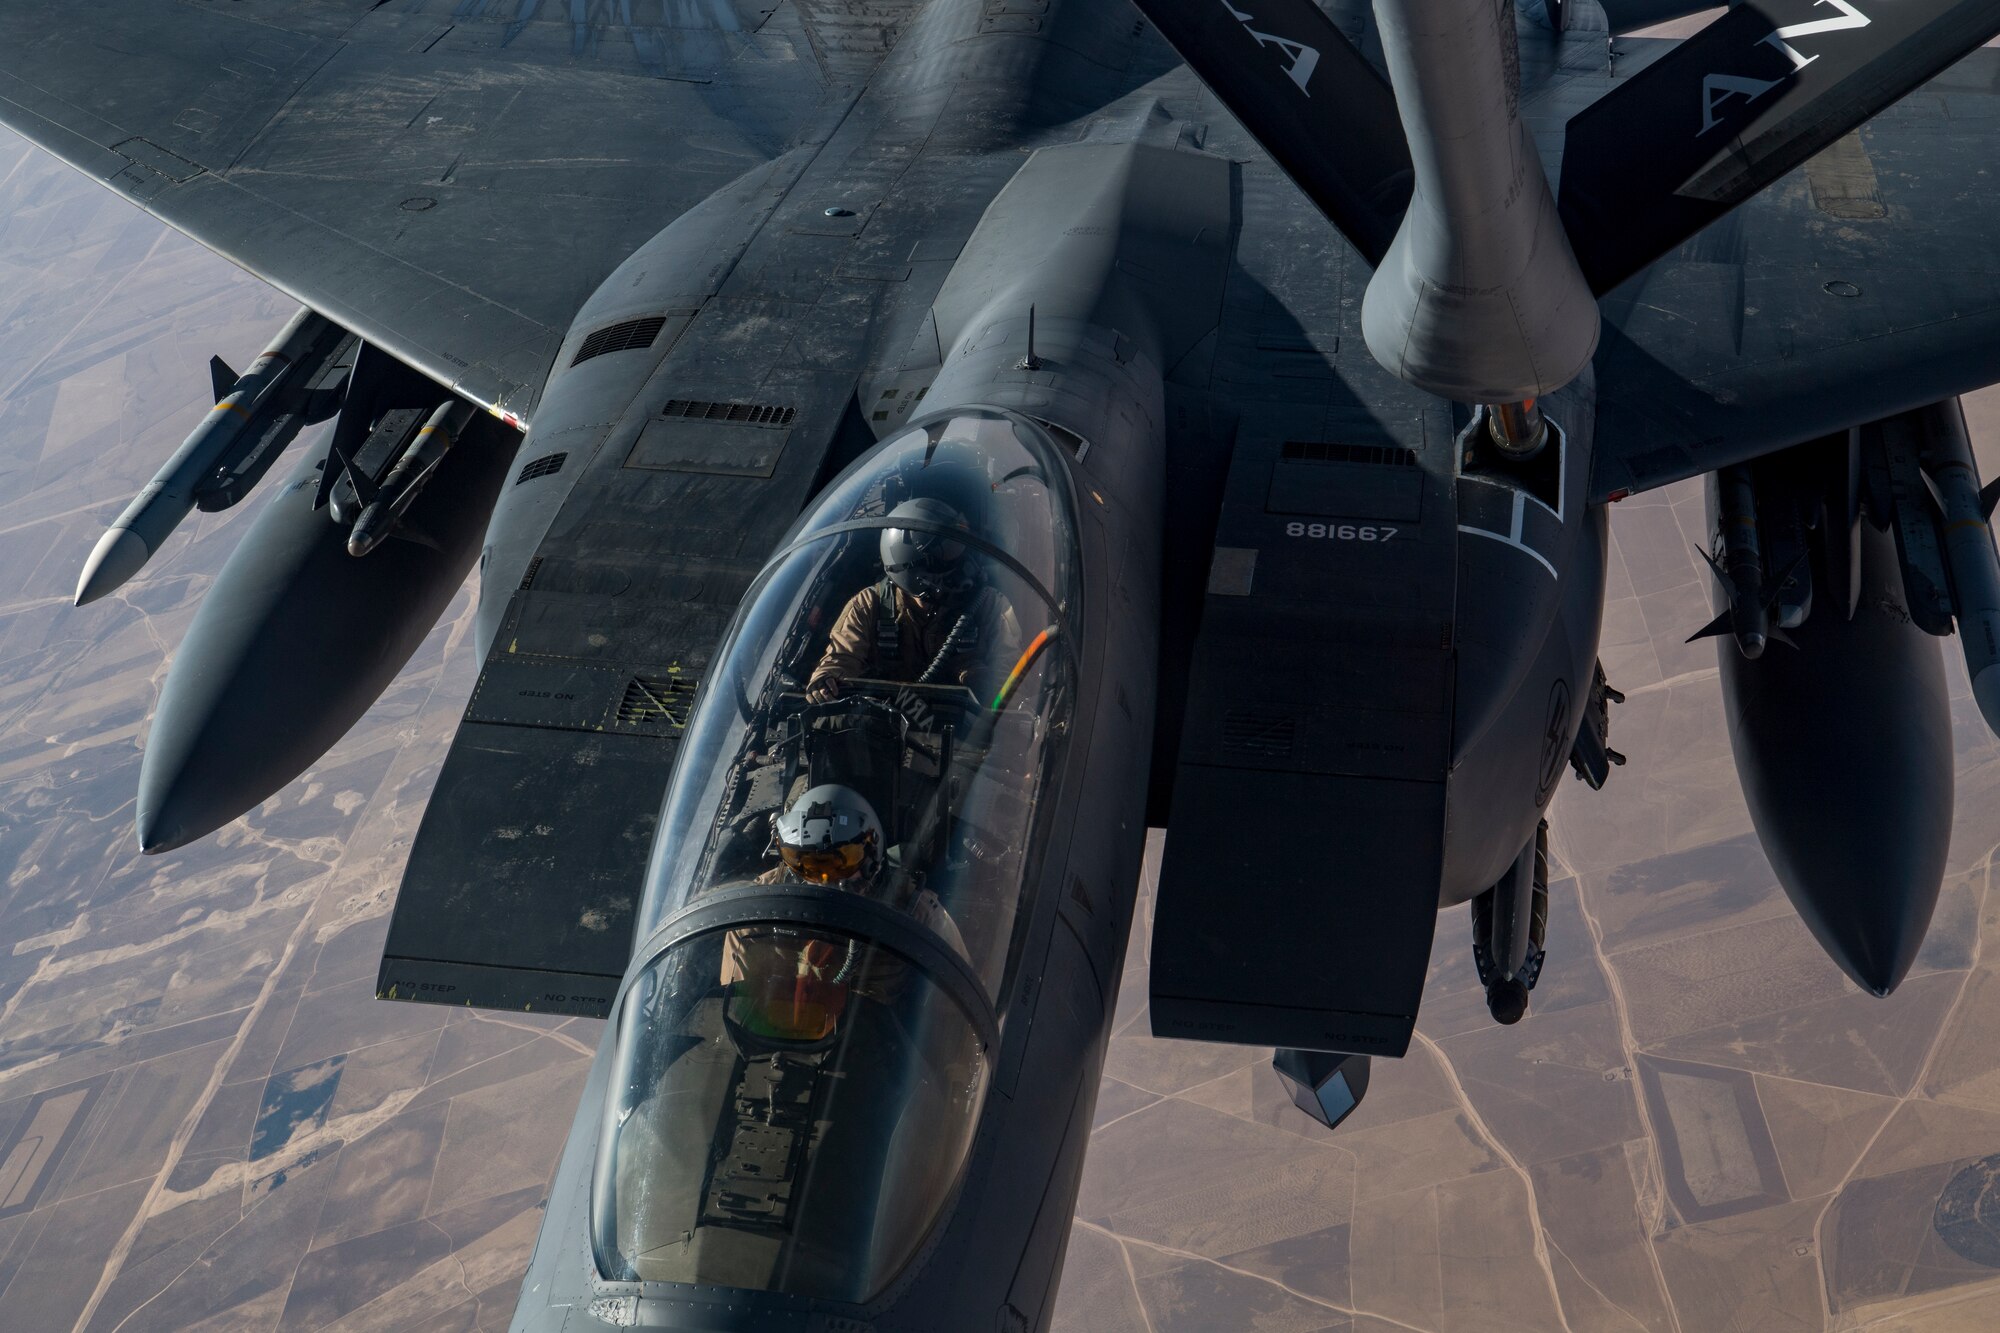 A U.S. Air Force KC-135 Stratotanker refuels A U.S. Air Force F-15 Strike Eagle over northern Iraq, Nov. 20, 2019.